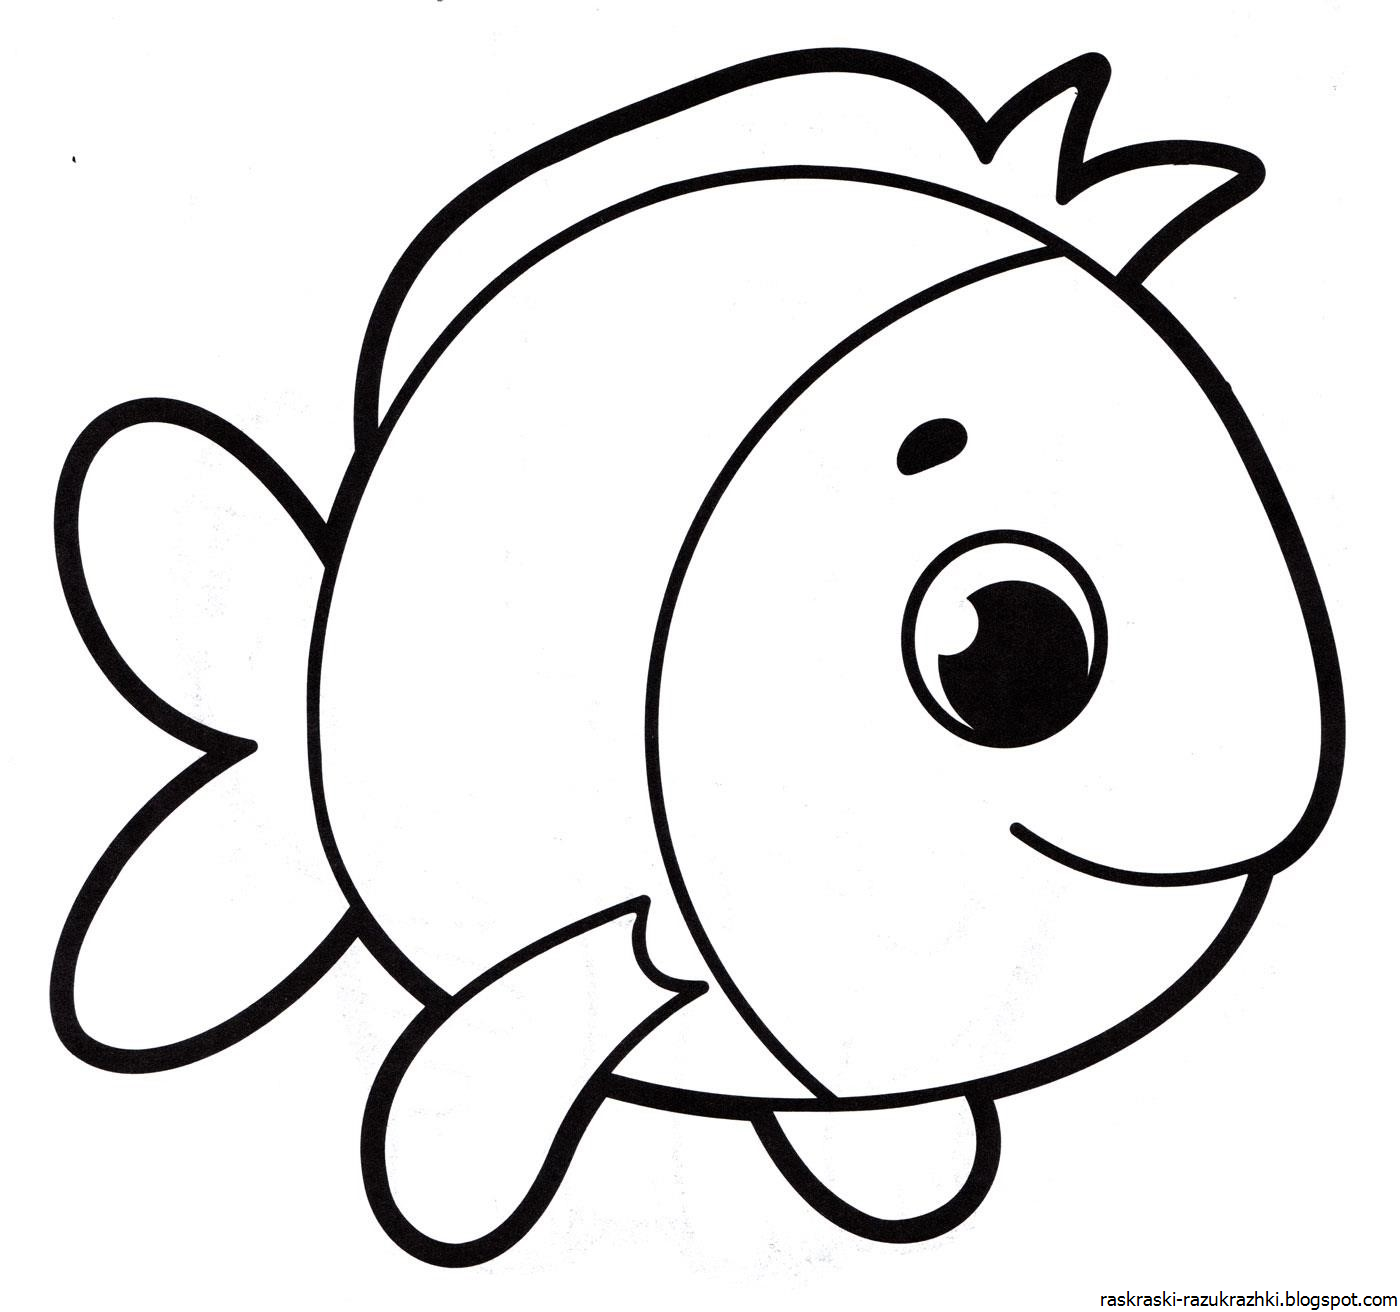 Раскраски рыбки для детей 3 4 лет. Раскраска рыбка. Рыбка раскраска для детей. Рыбка для раскрашивания для детей. Рыбка картинка для детей раскраска.